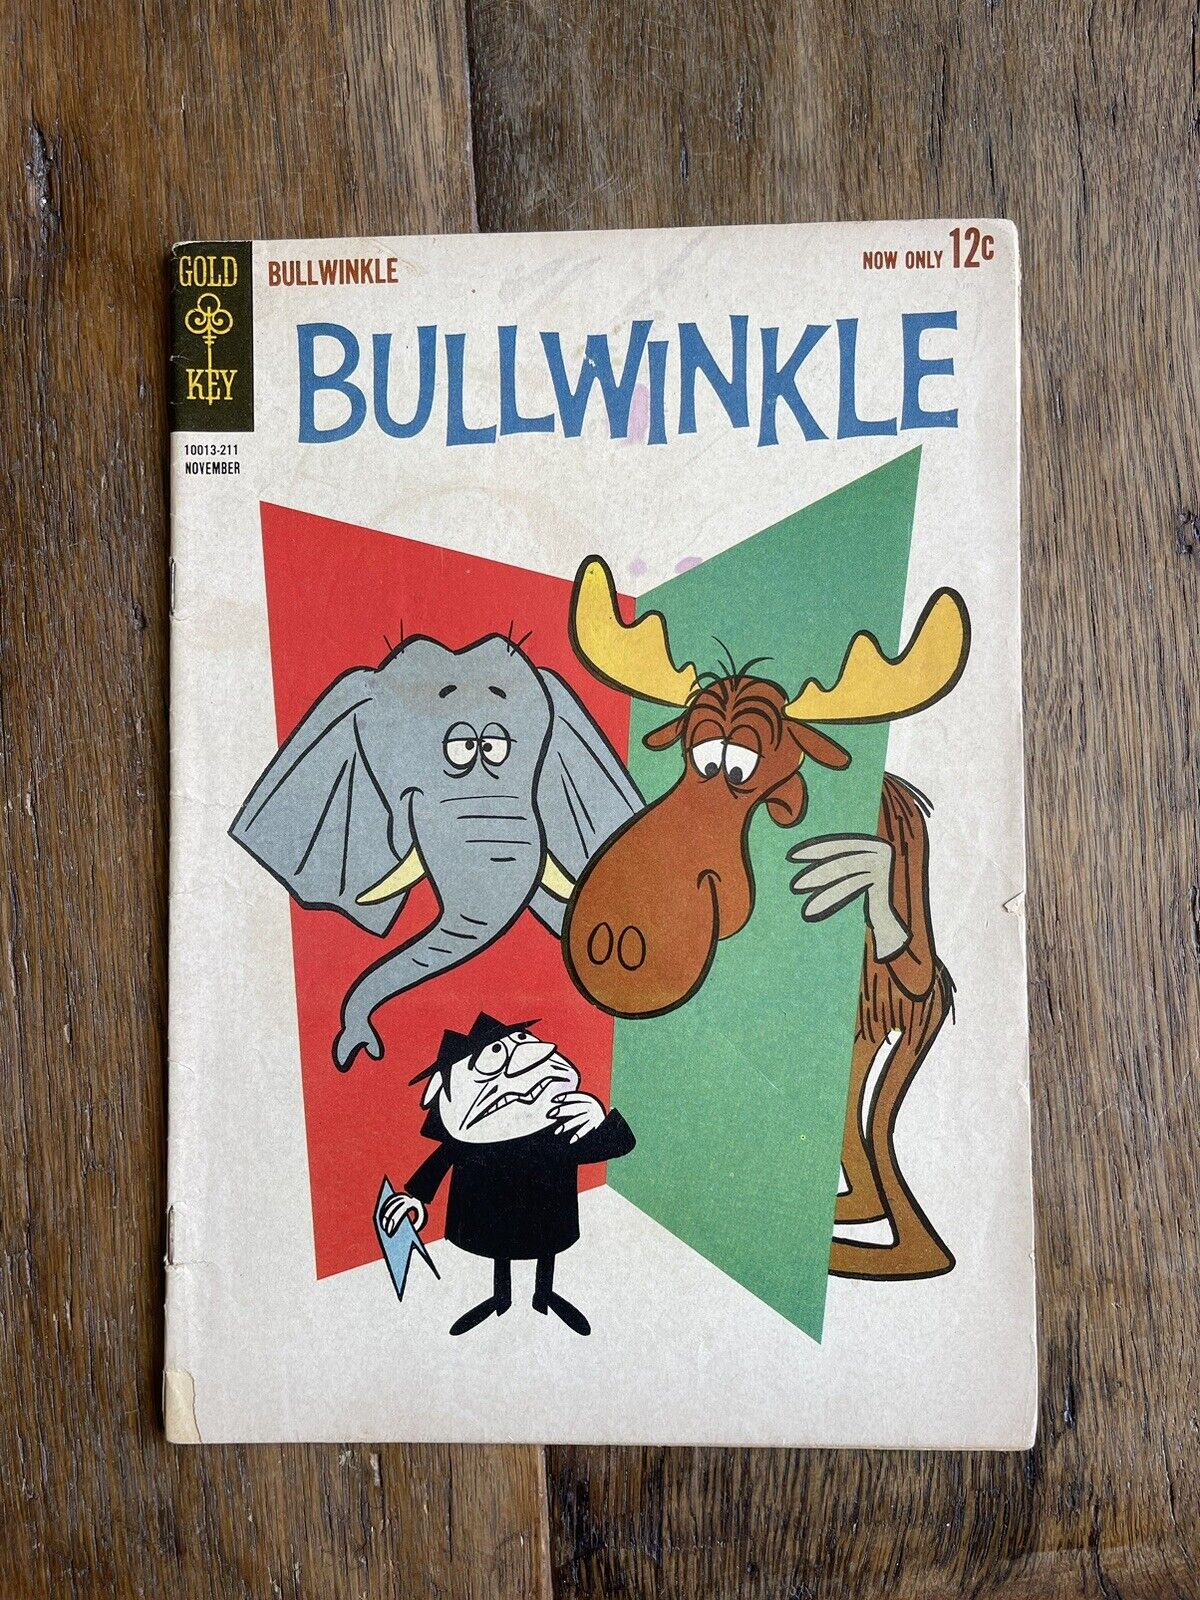 1962 BULLWINKLE Gold Key Comic #1  - K1